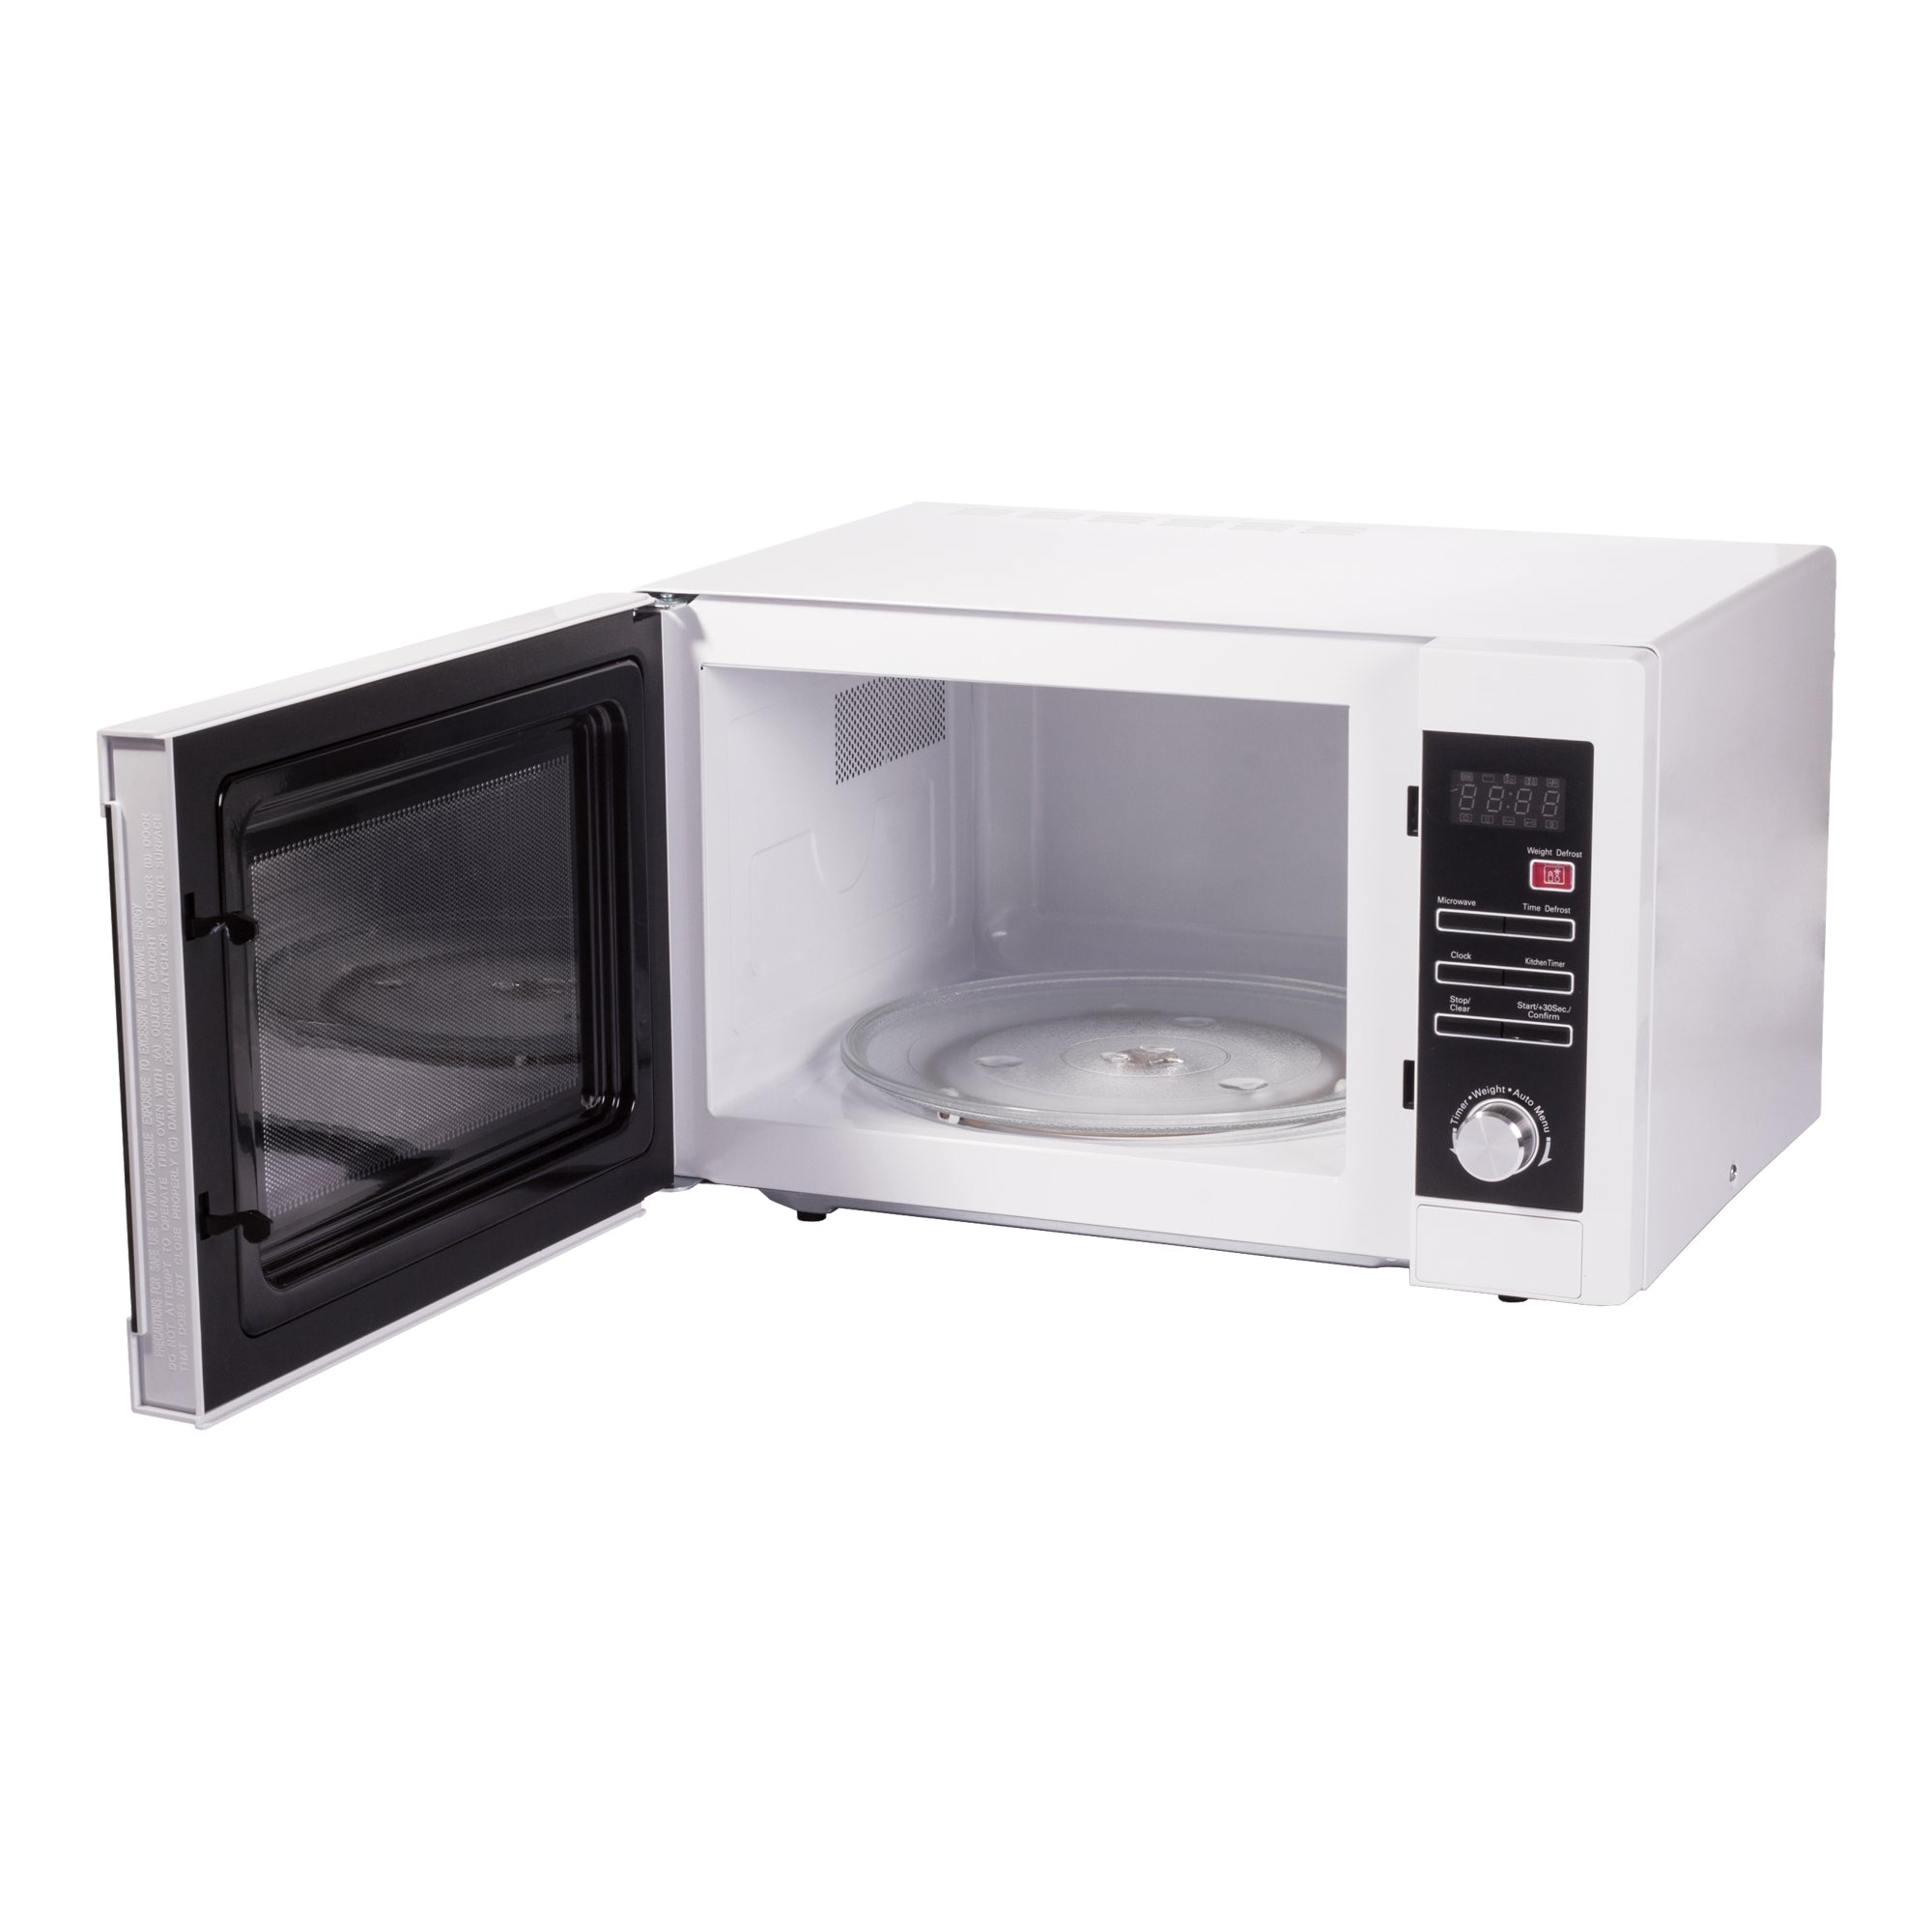 Digital Microwave, 30 Litre, 900W, White